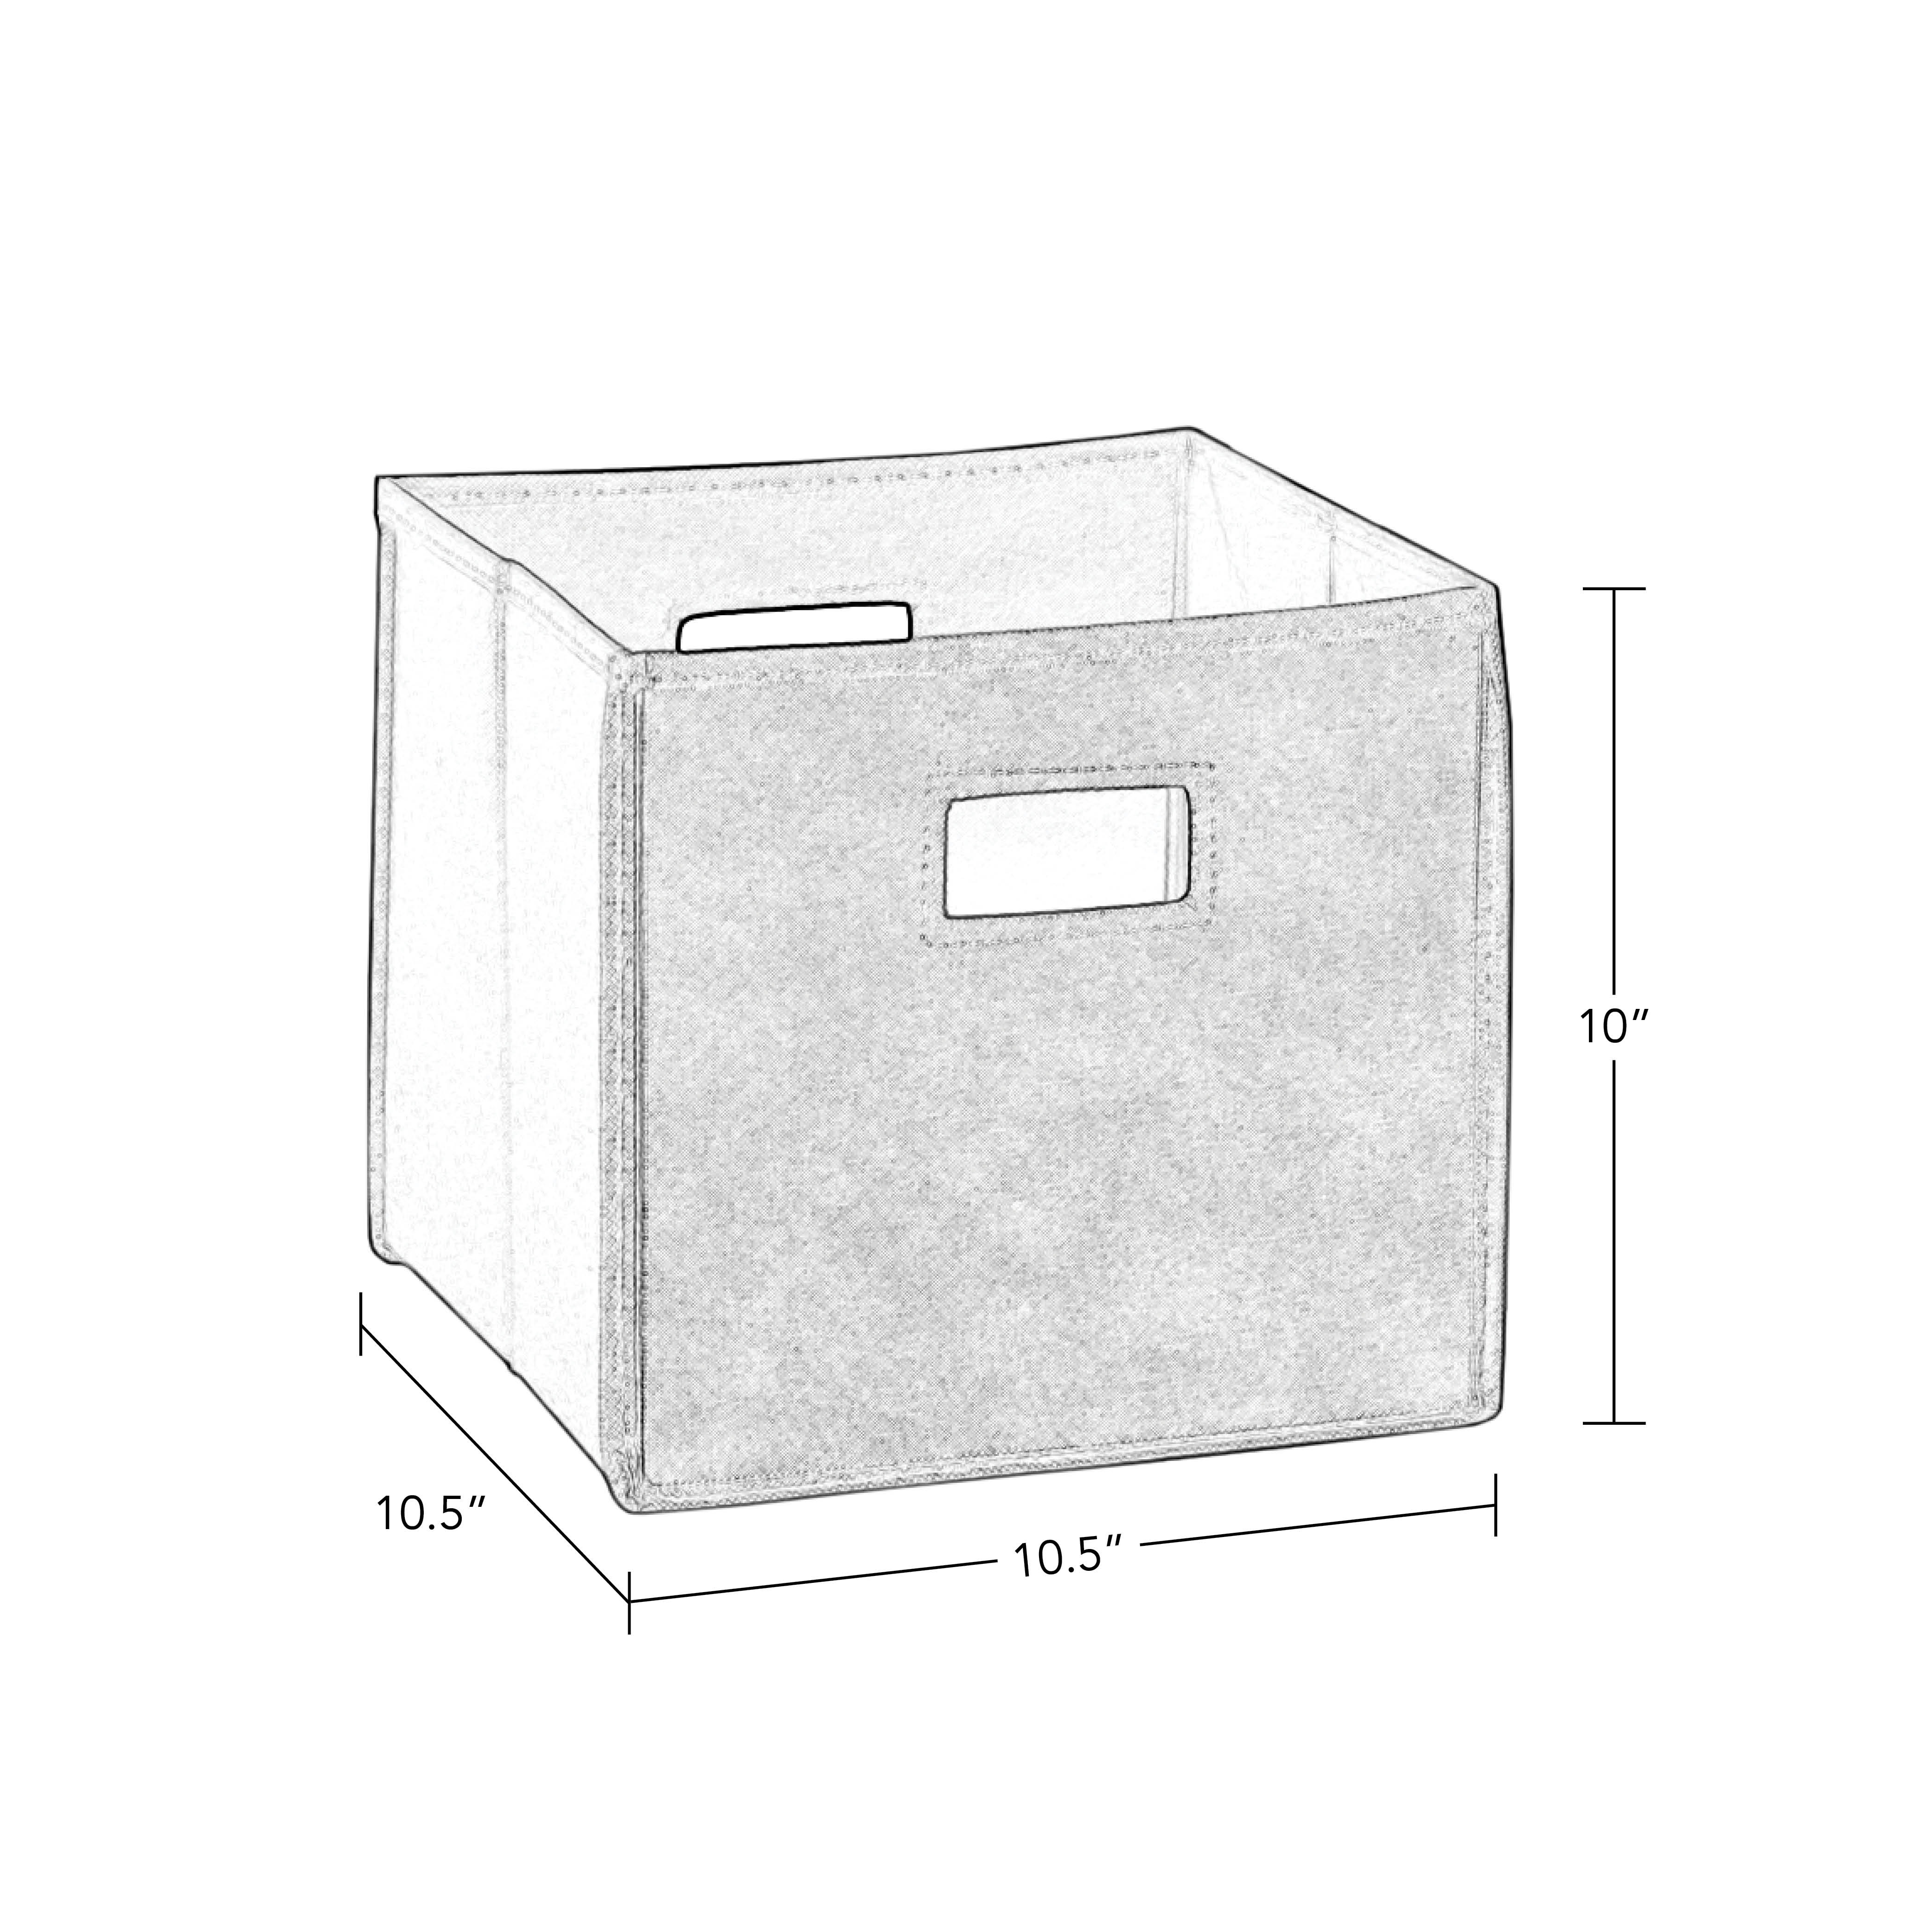 RiverRidge Home Folding Fabric Cube Storage Bin Set of 2 - Coral - image 2 of 11